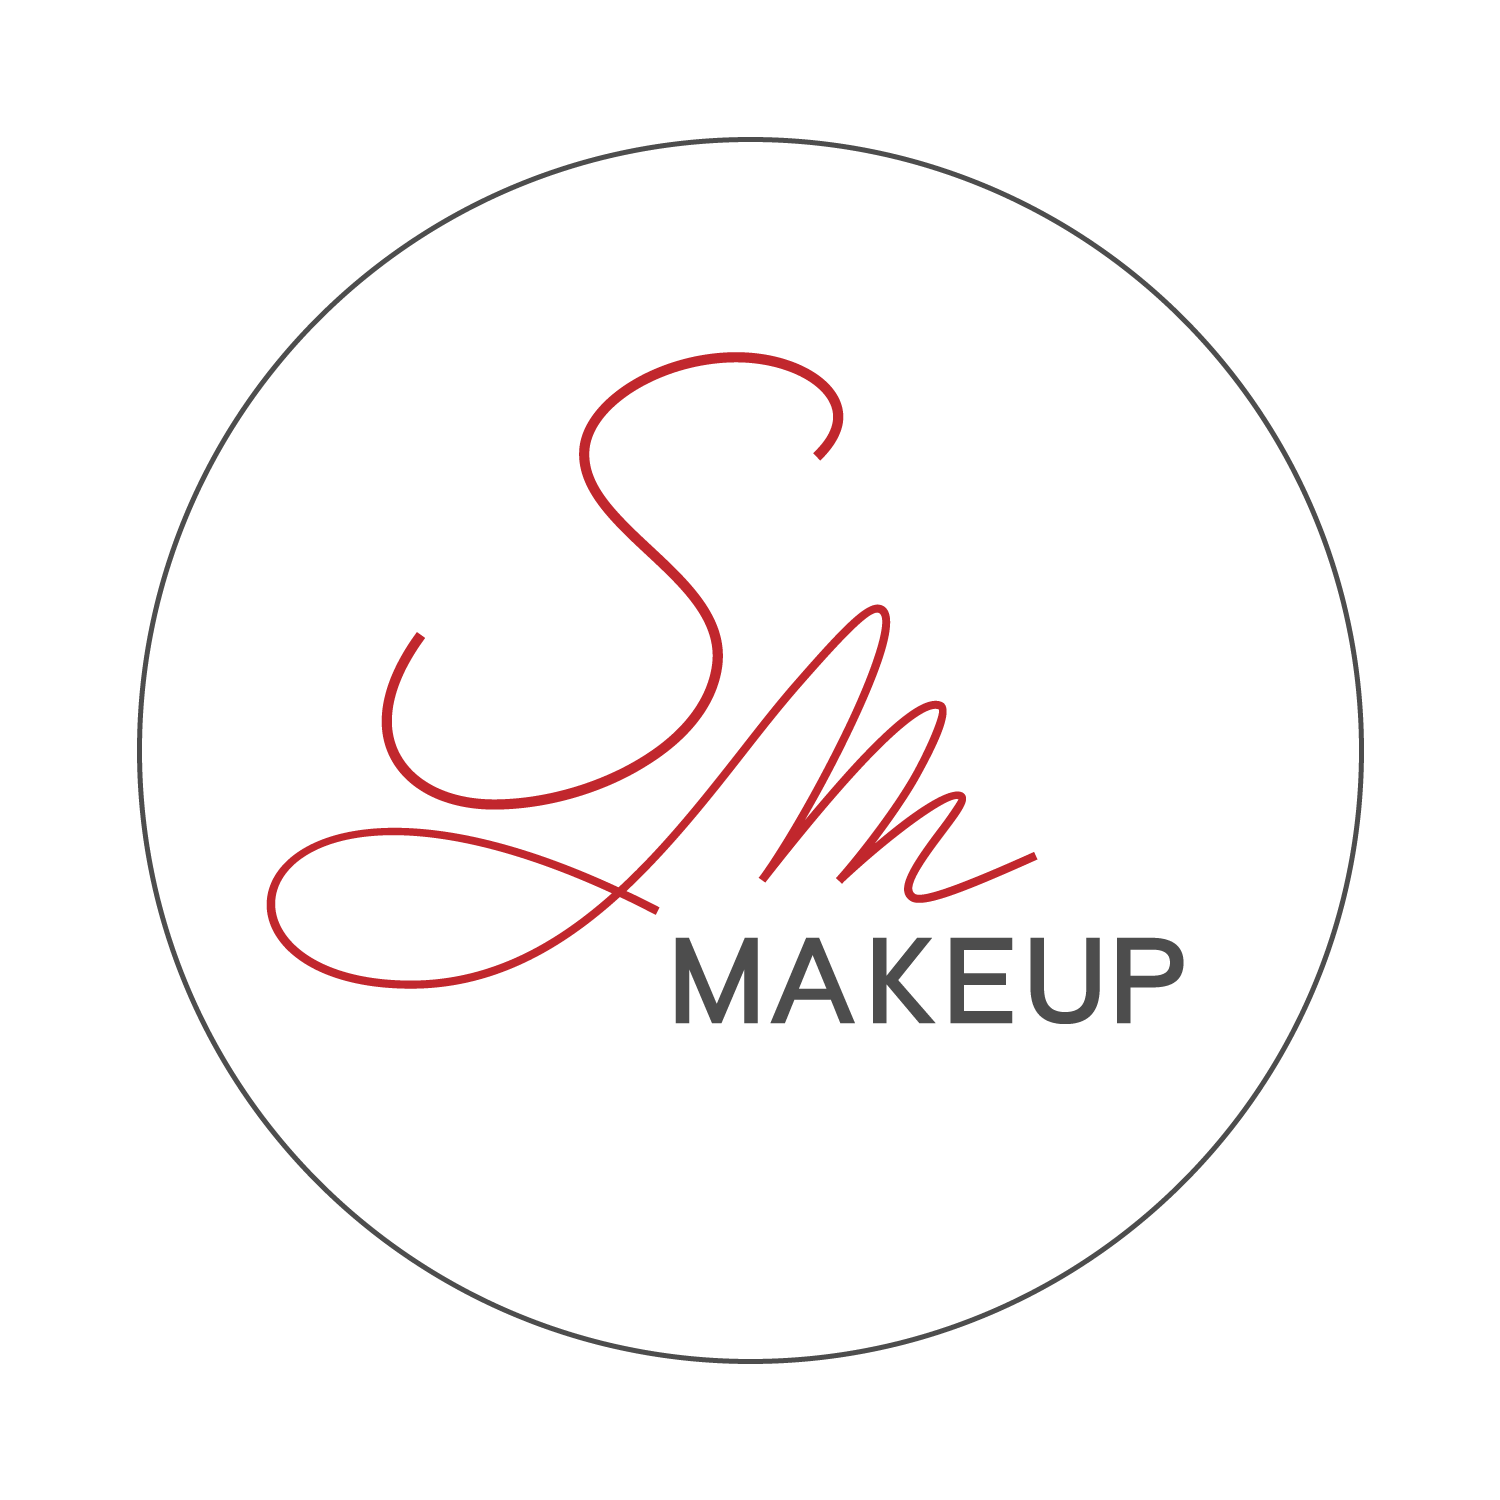 sm-makeup-round-white-backg